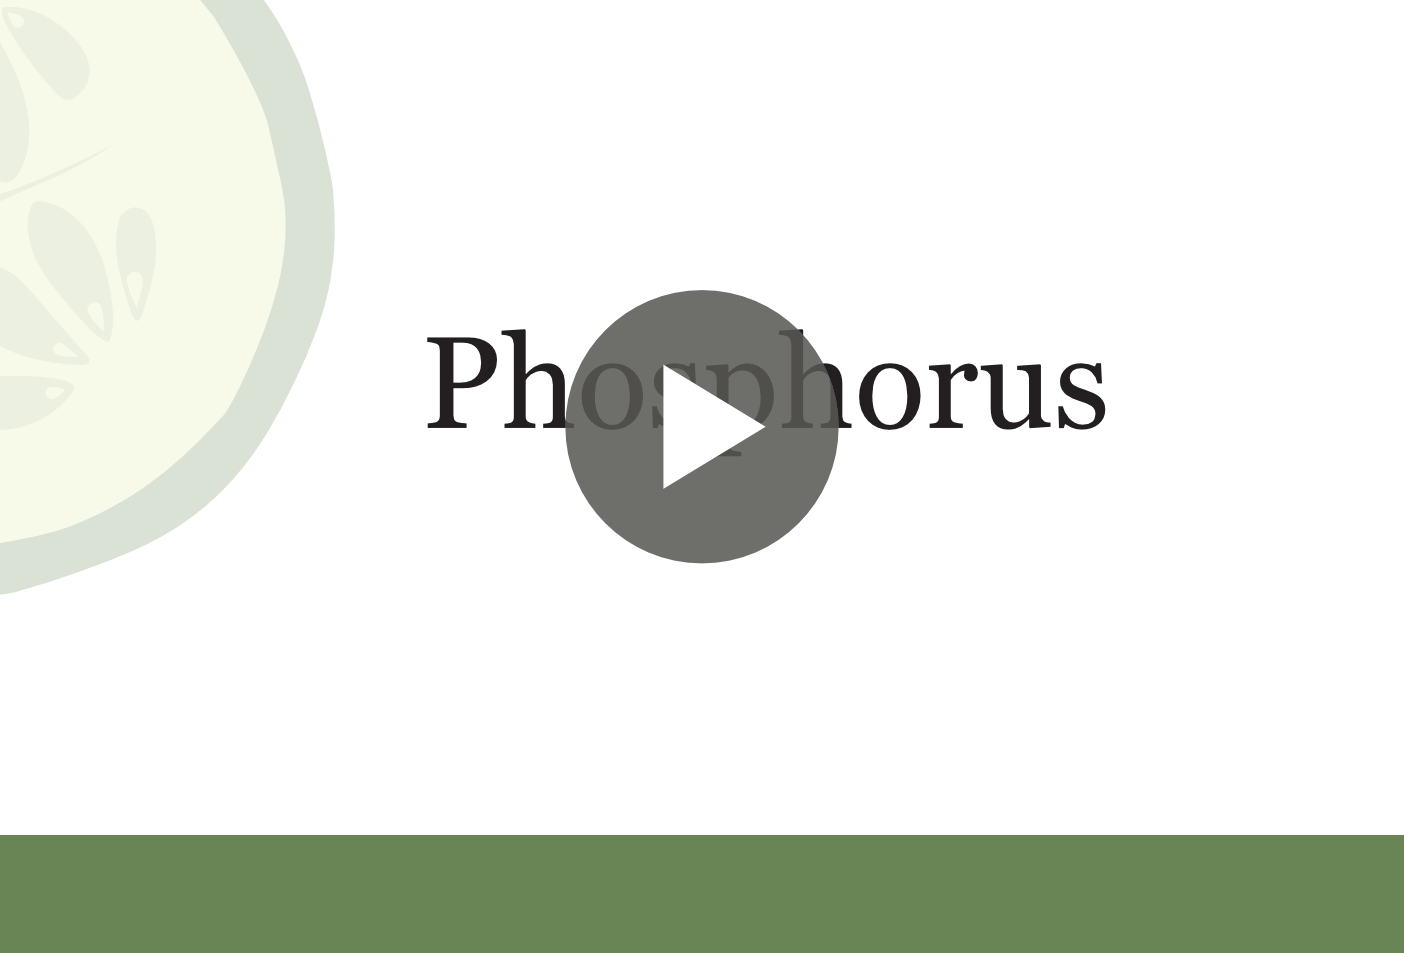 A Video Thumbnail Image About Phosphorus